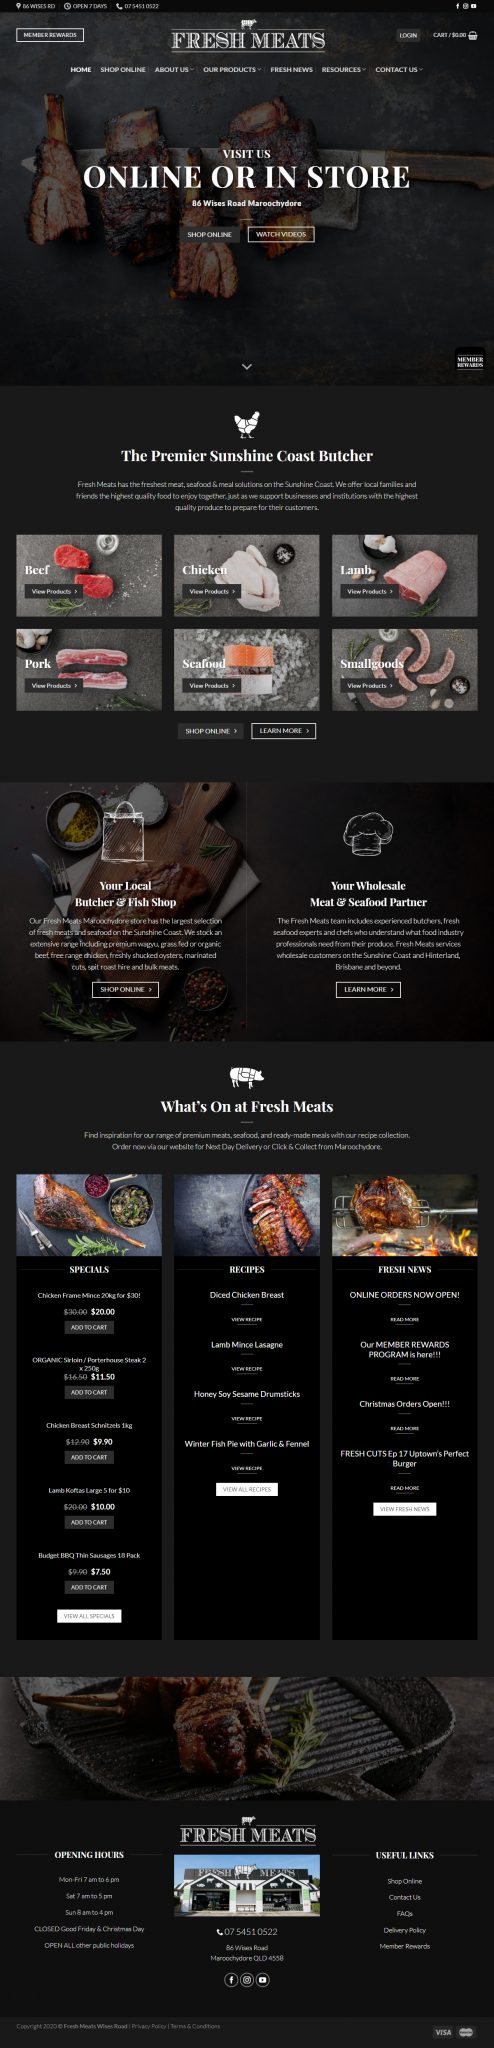 Hospitality Tourism Website Design Fresh Meats